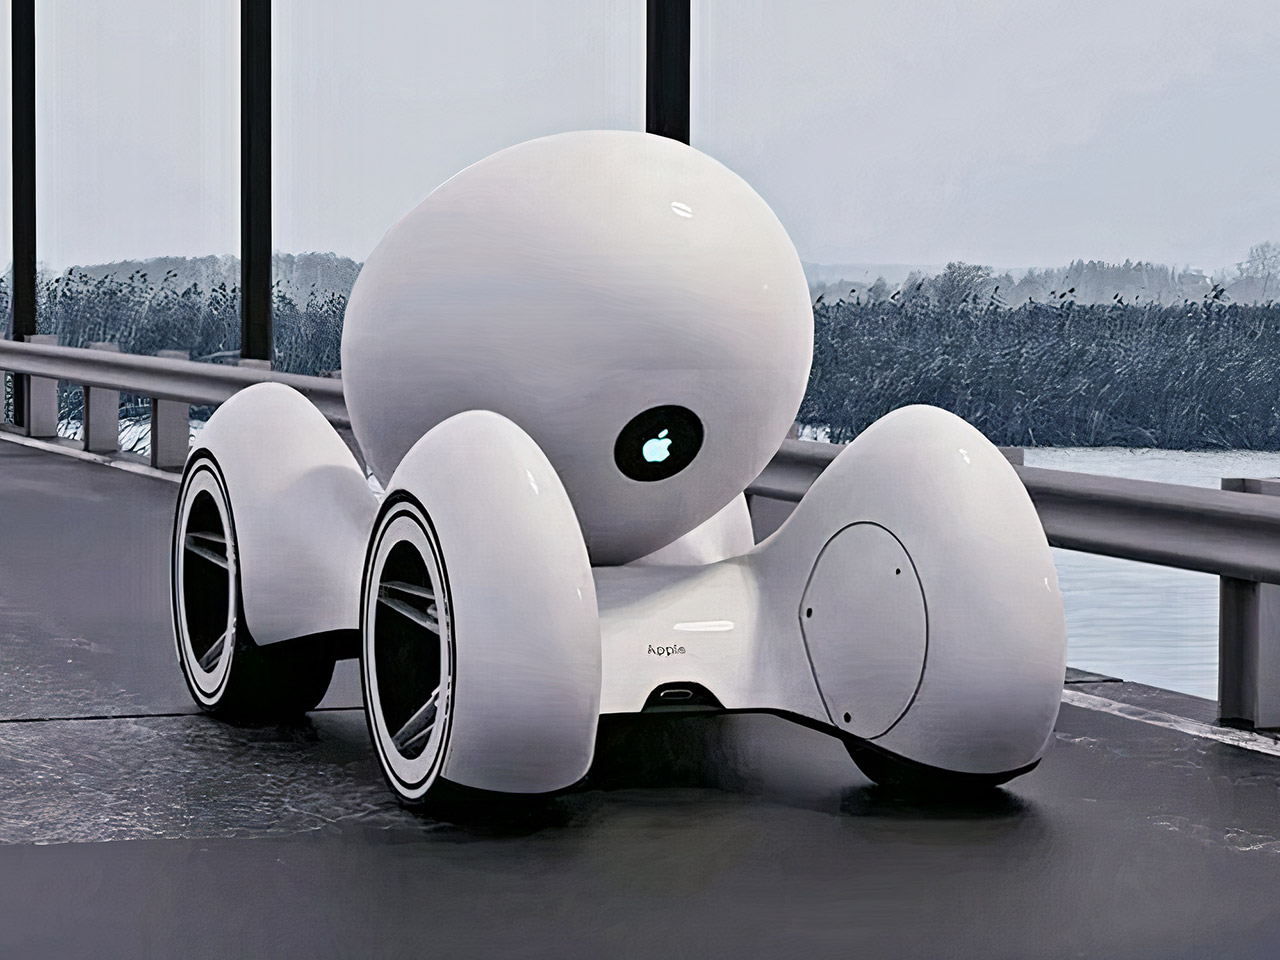 Apple Concept Car Pod